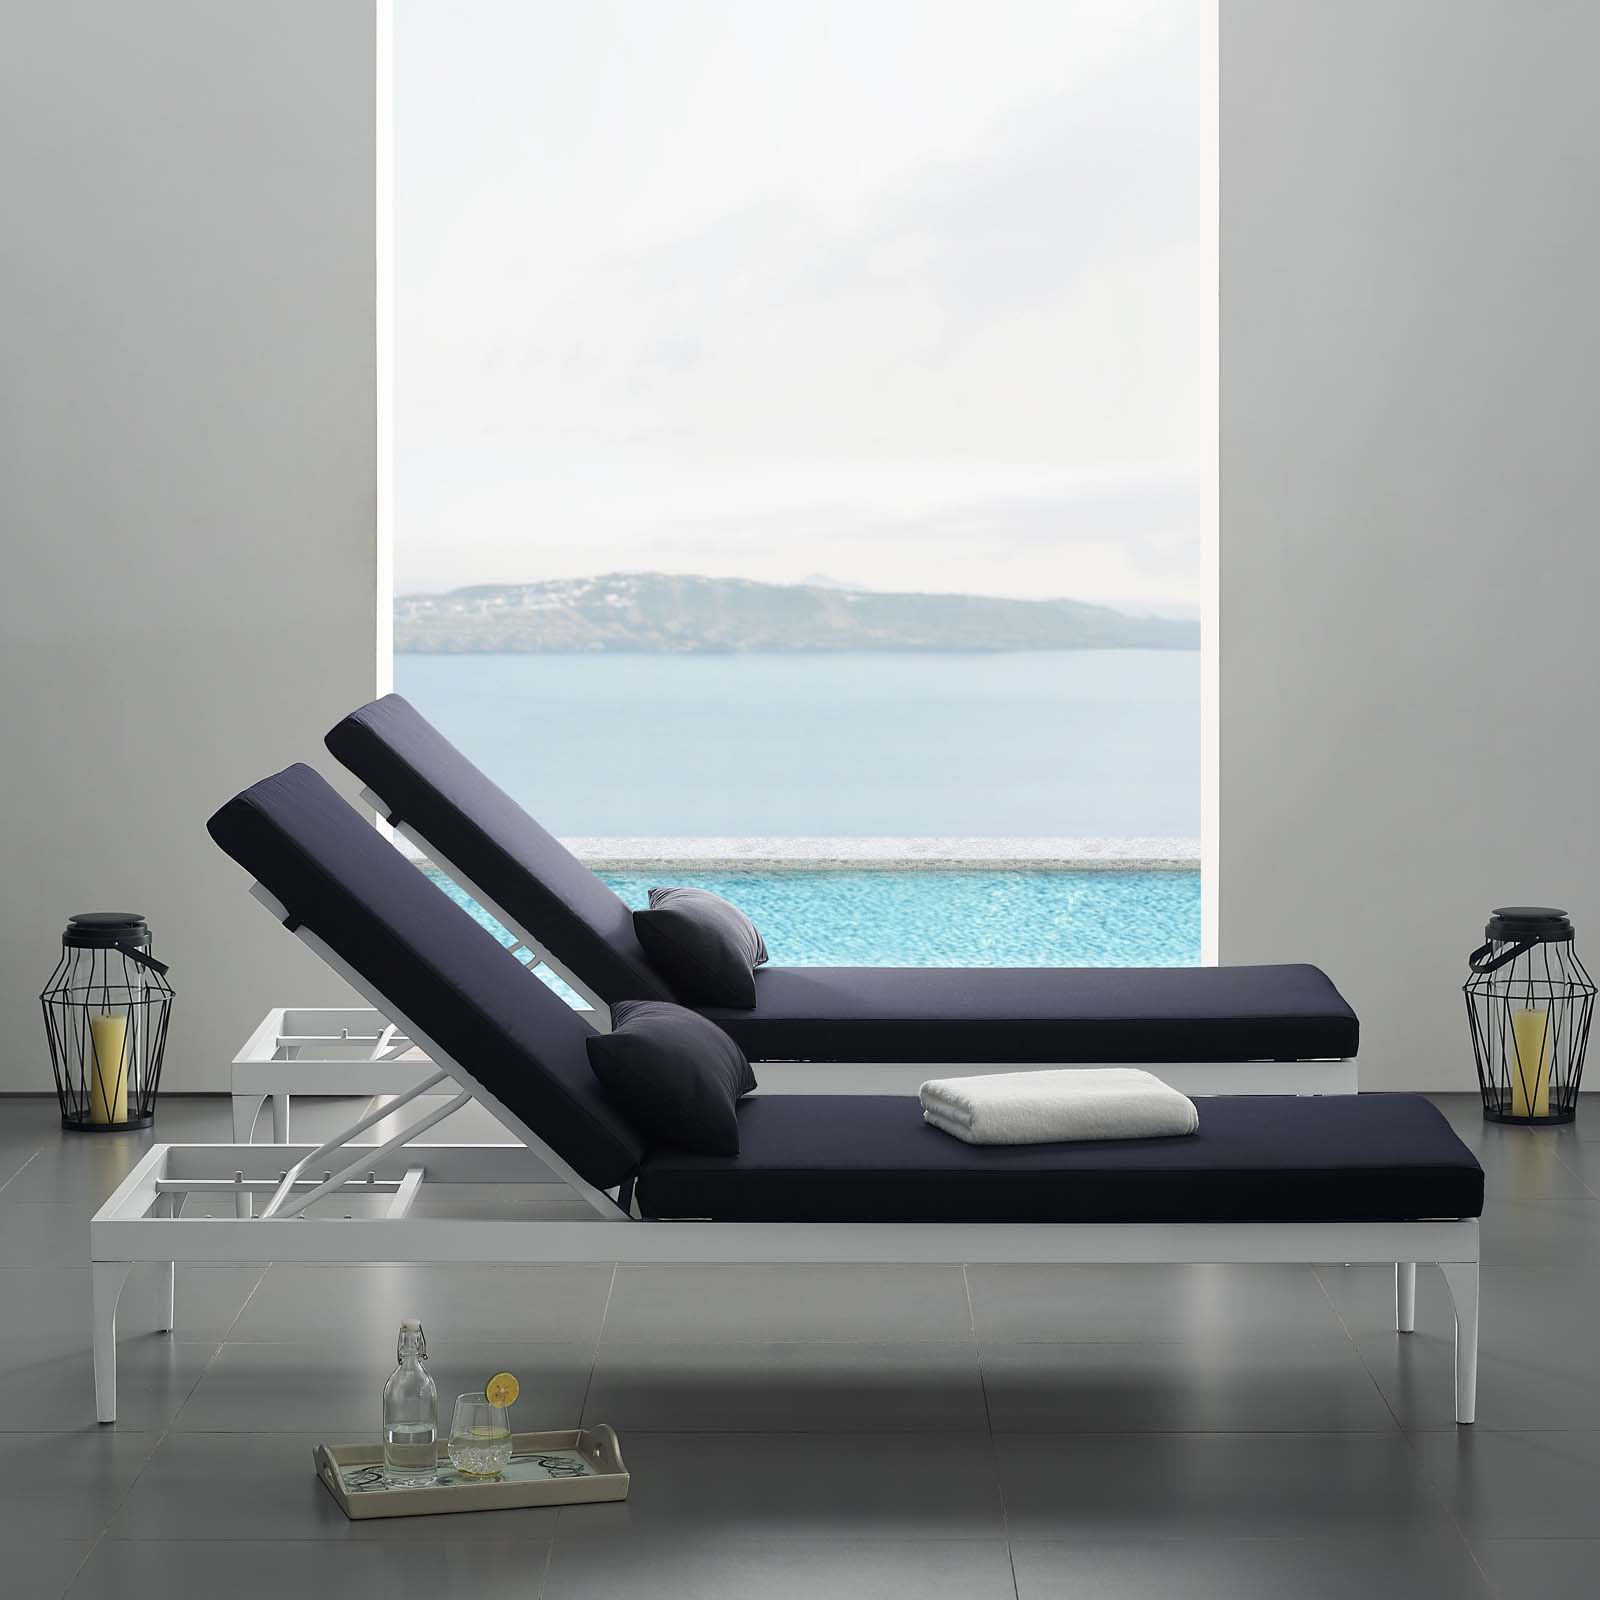 Modern Contemporary Urban Design Outdoor Patio Balcony Garden Furniture Lounge Chair Chaise, Fabric Aluminium, White Navy - image 5 of 7